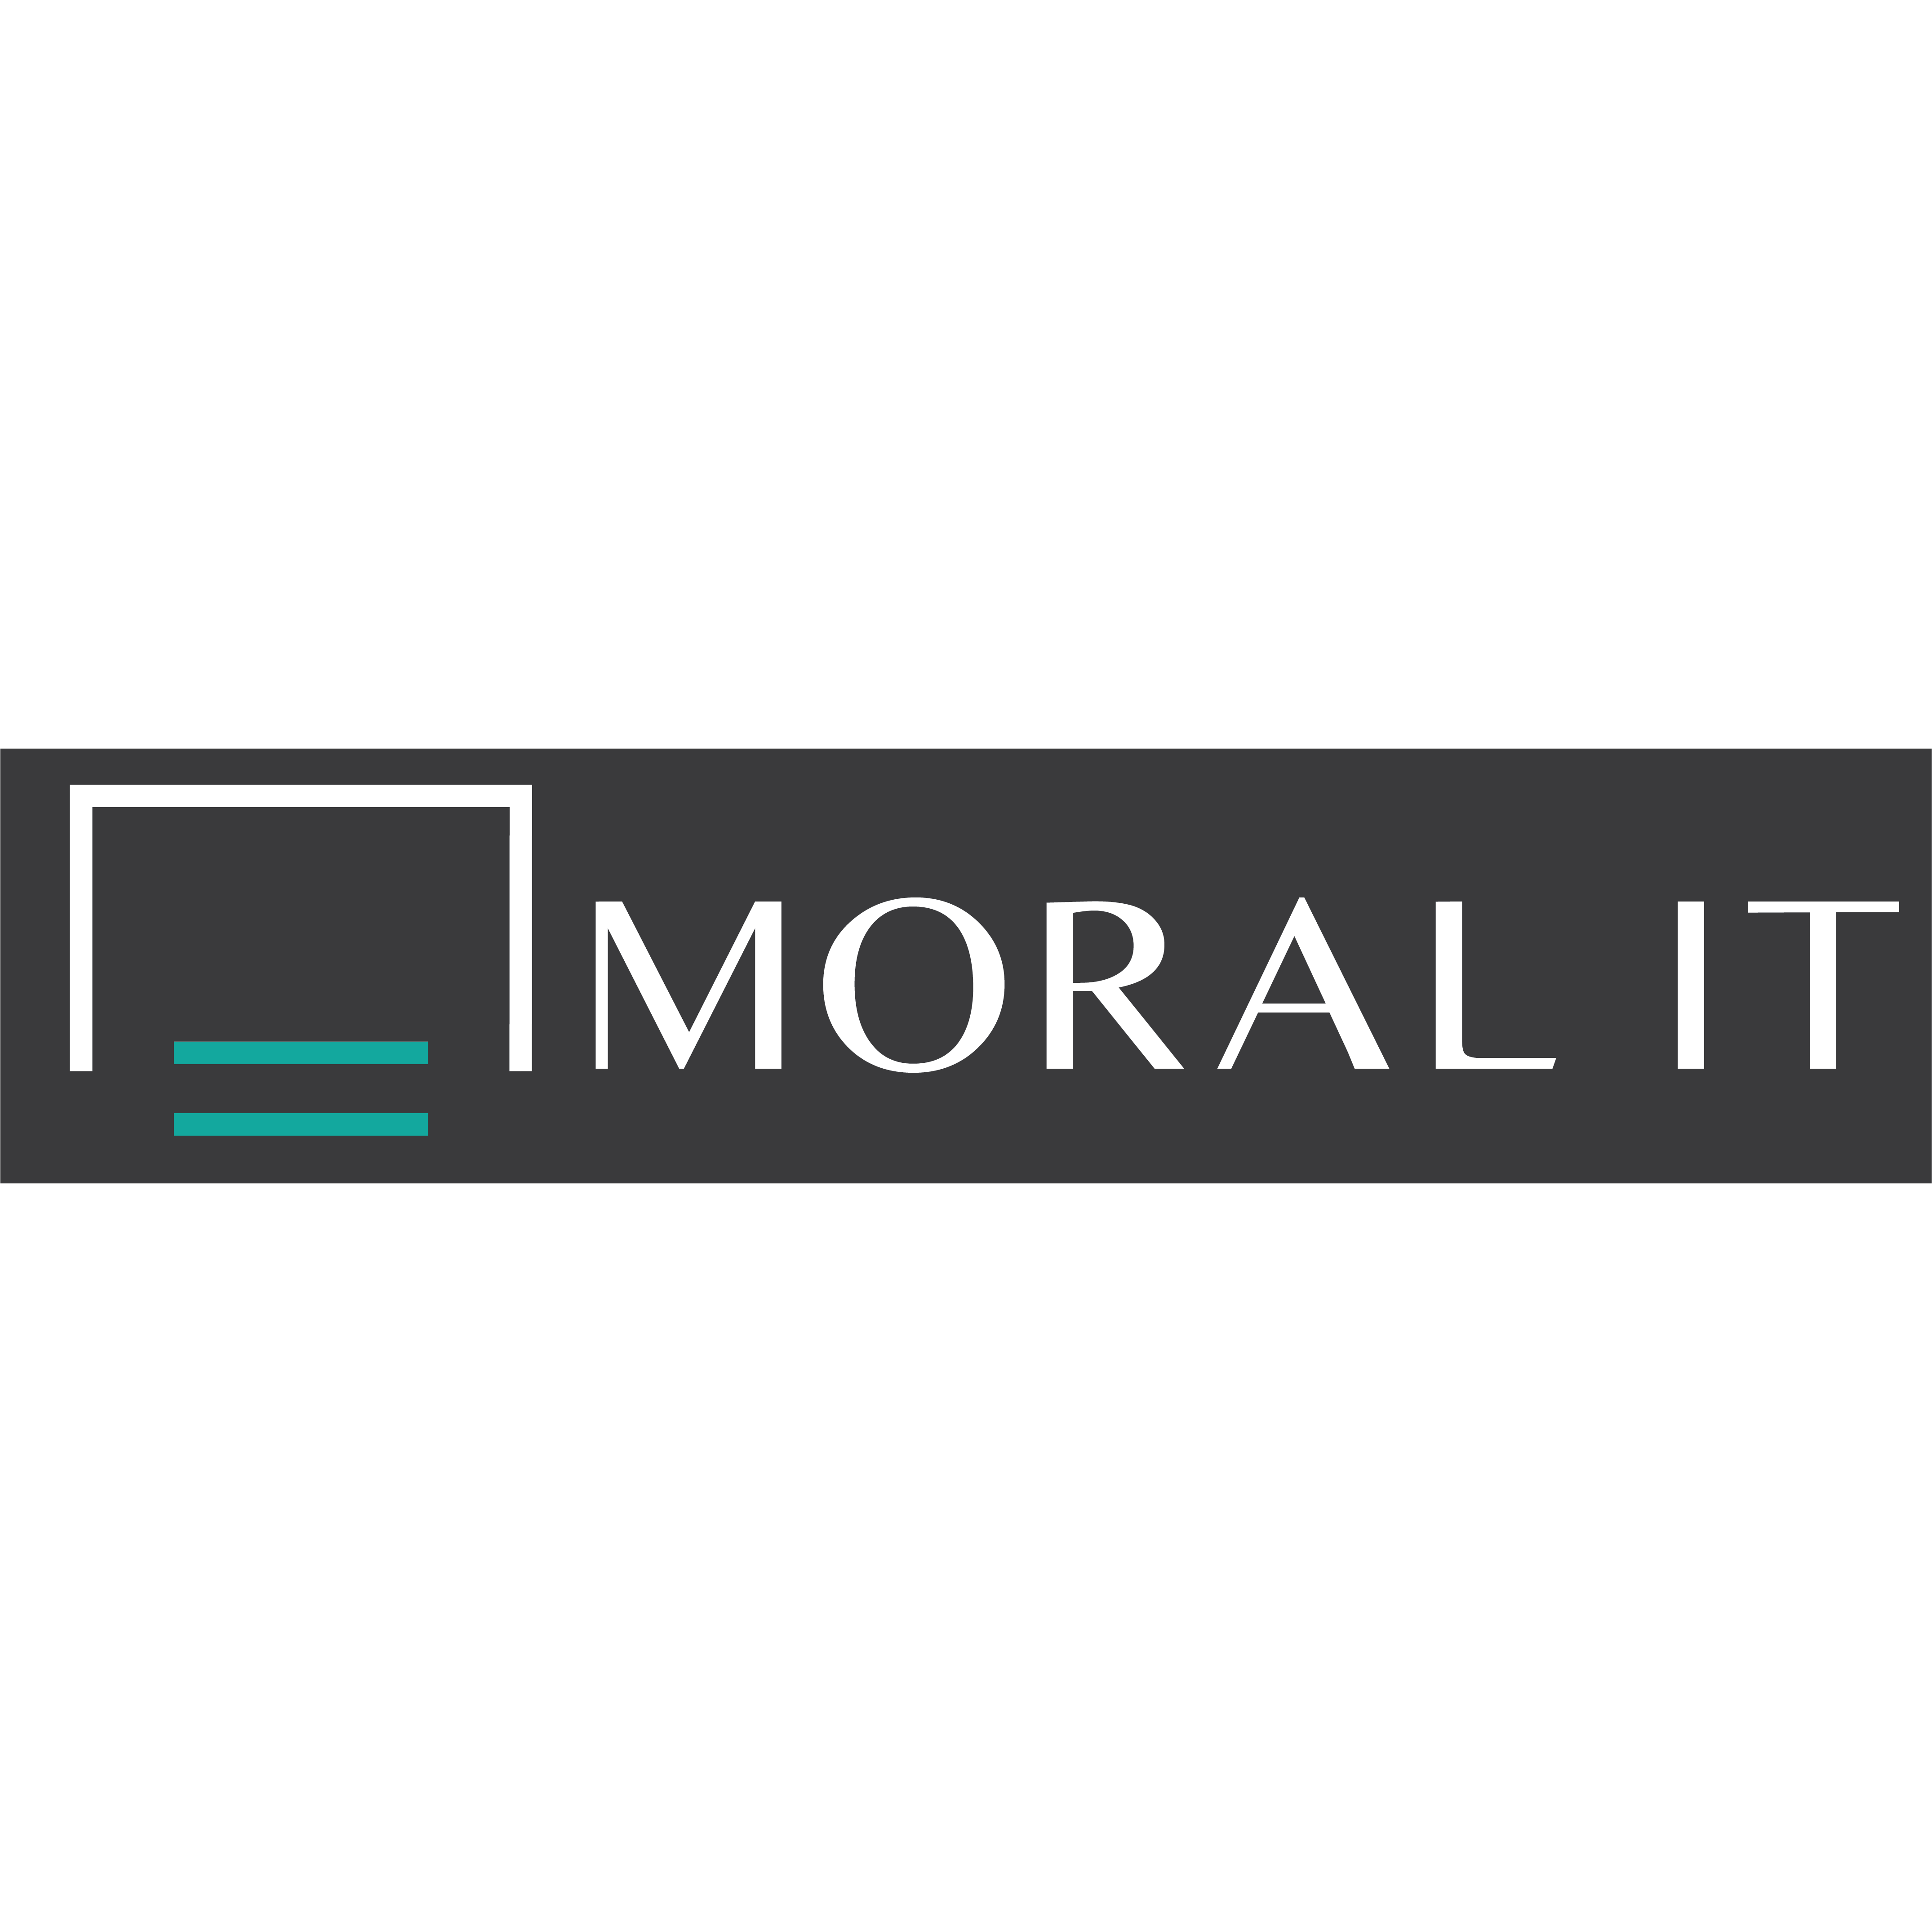 Moral IT